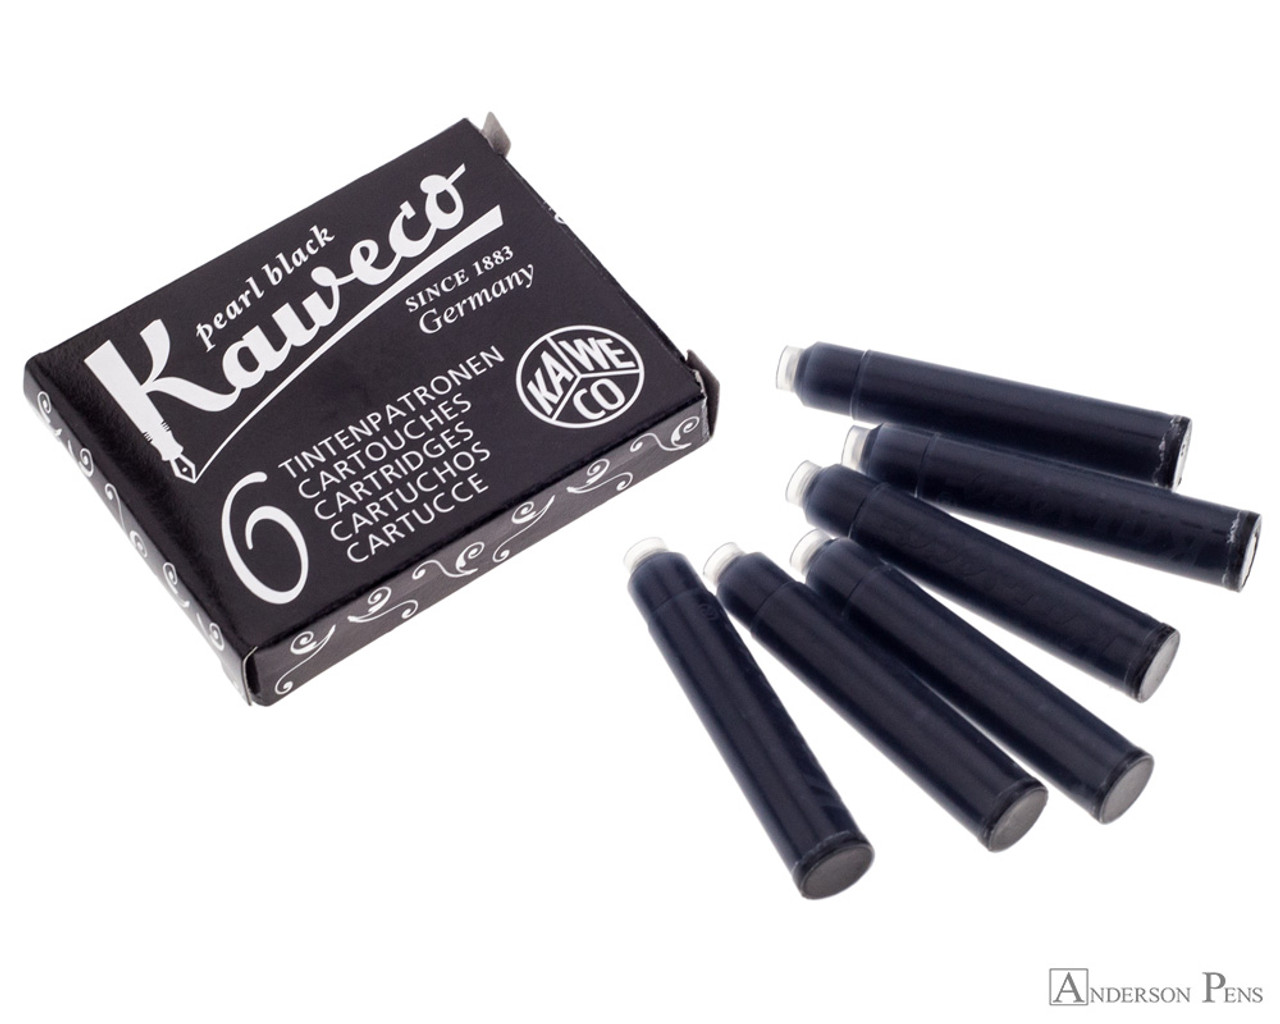 Kaweco Pearl Black Fountain Pen Ink Cartridges